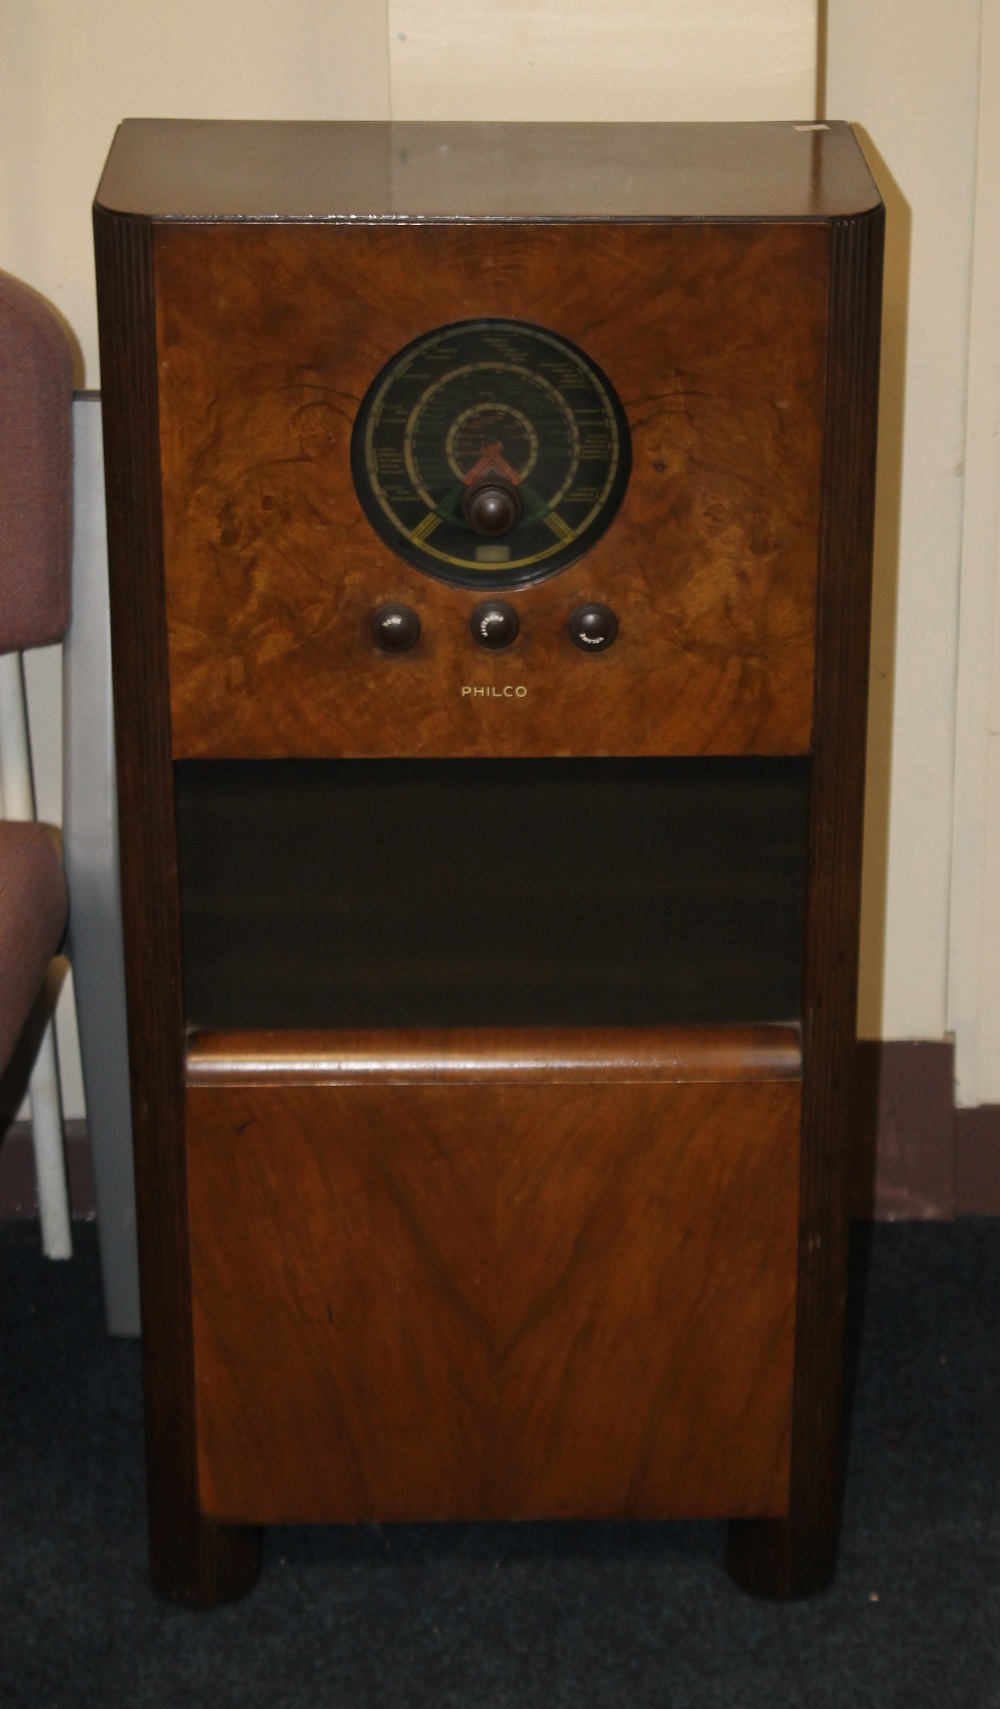 A 1930S PHILCO WALNUT CASED FLOOR STANDING RADIO